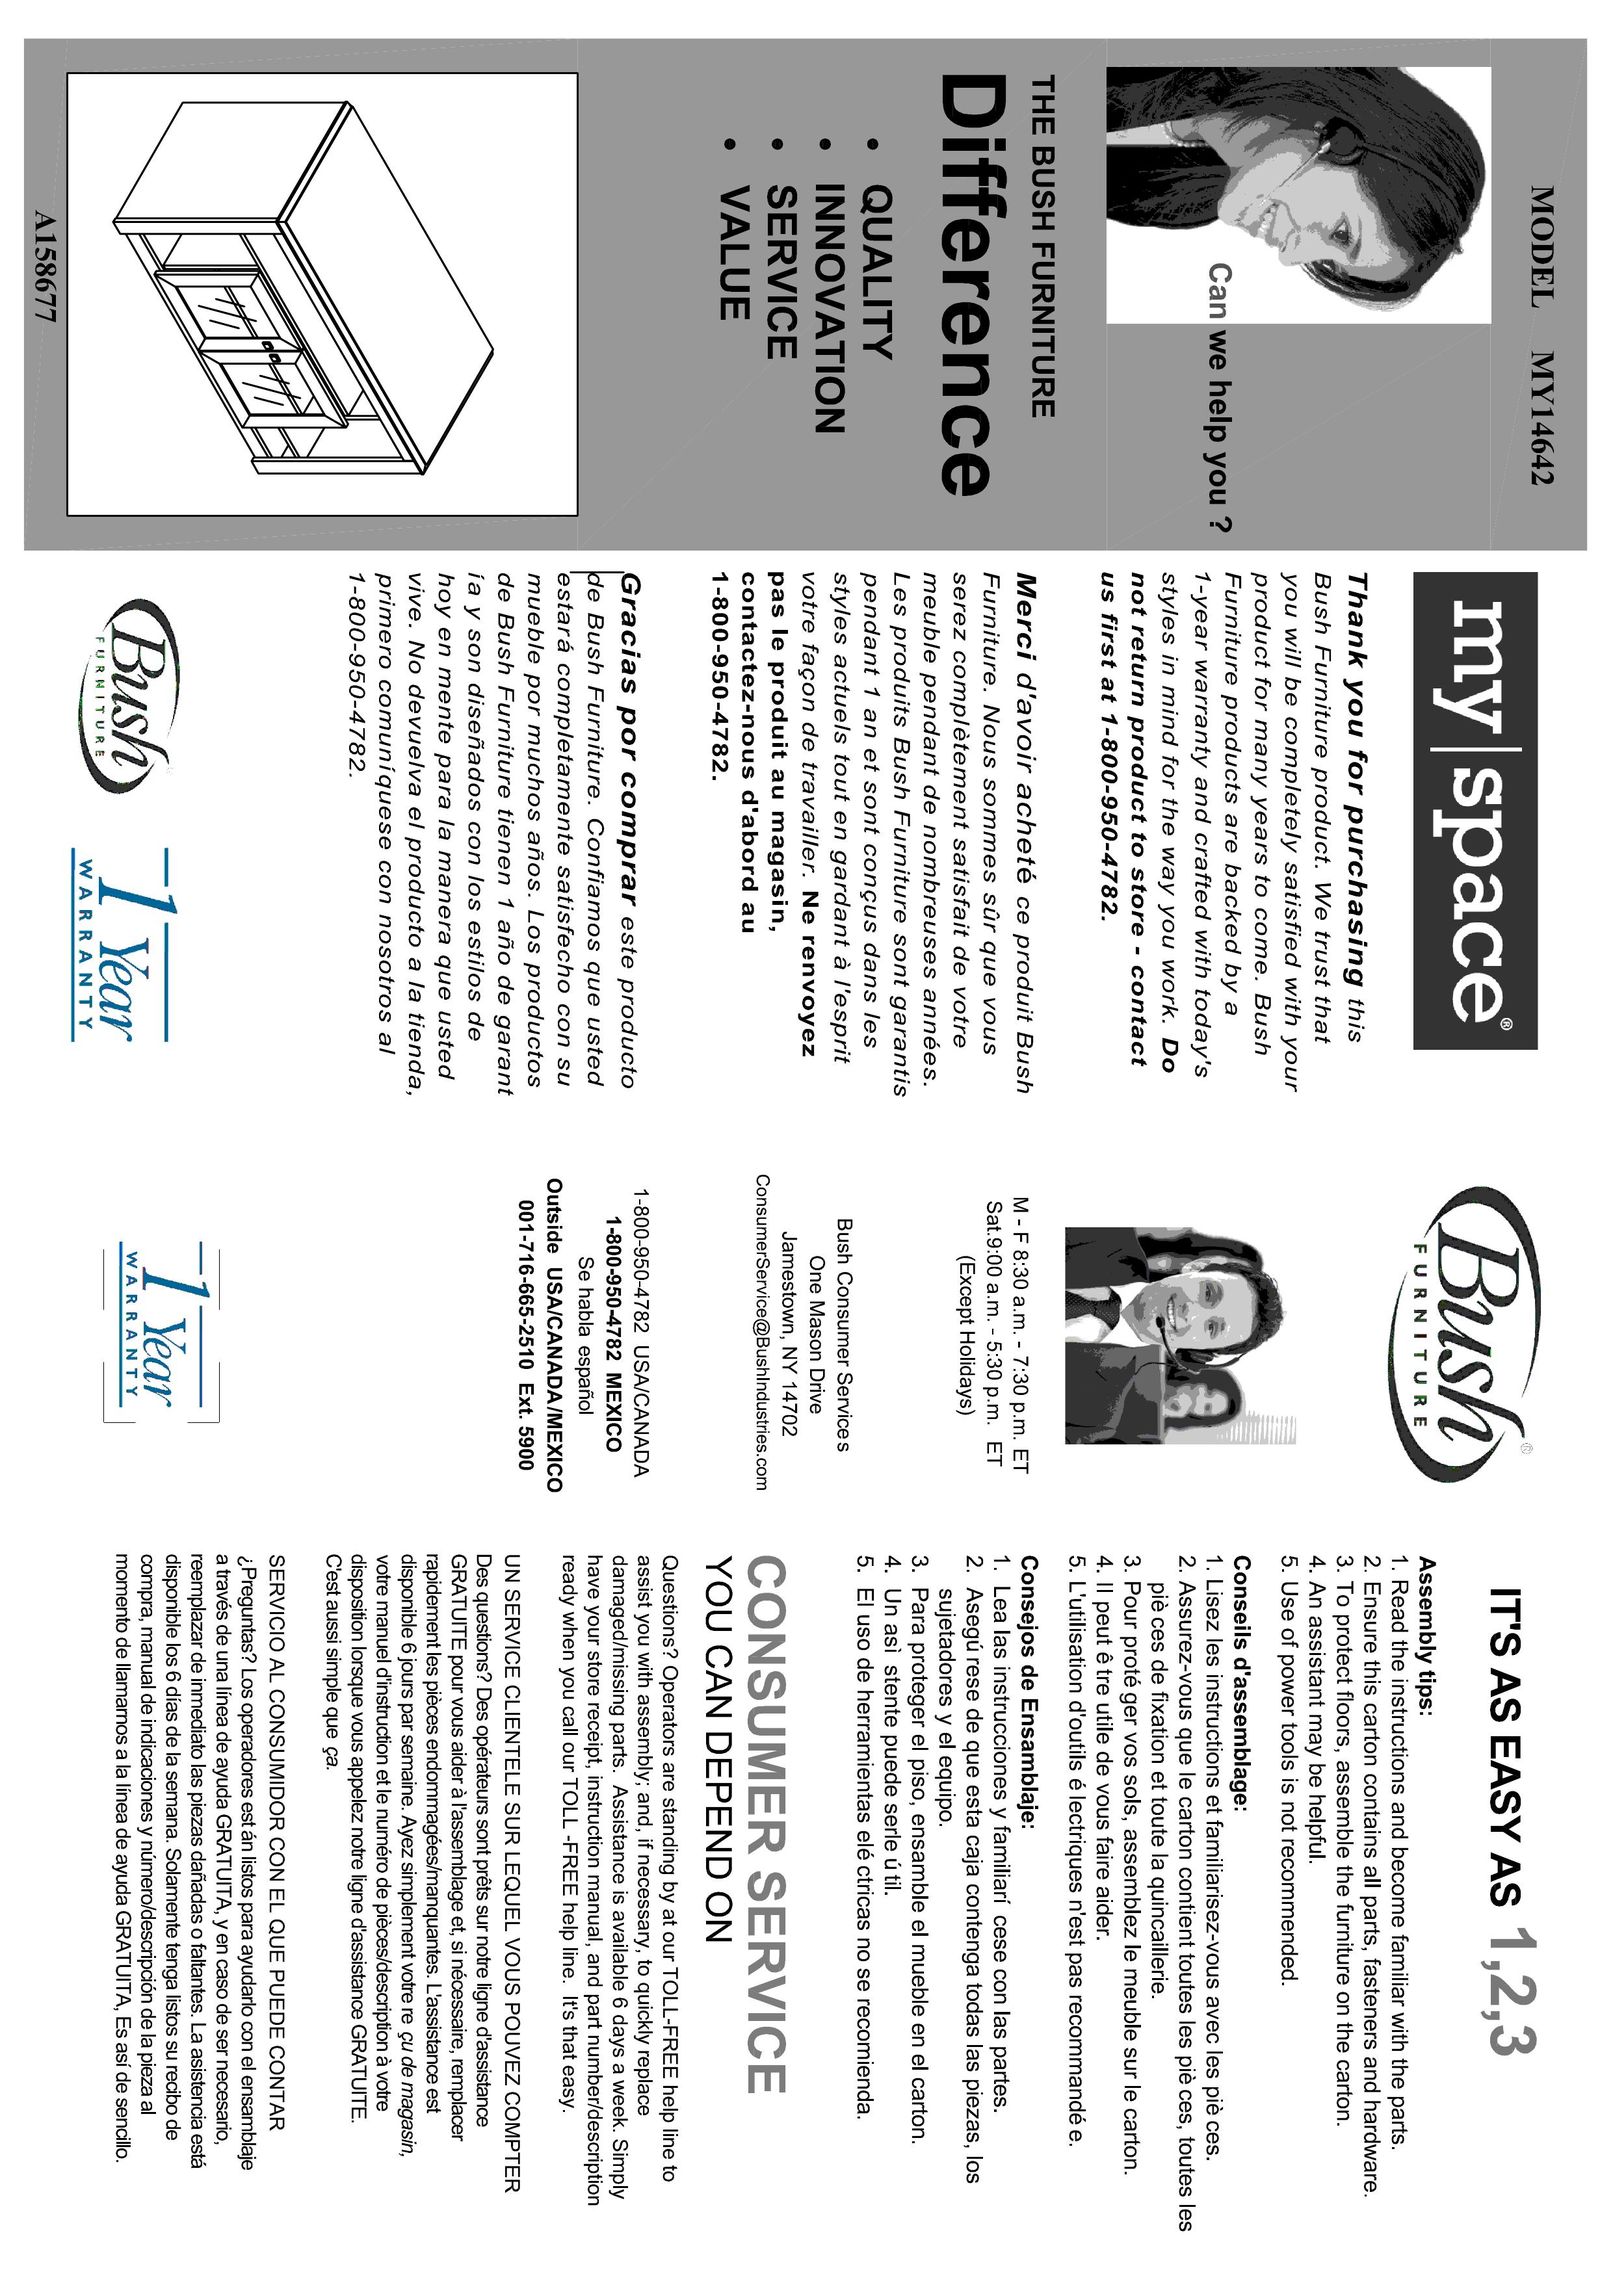 Bush MY14642 Indoor Furnishings User Manual (Page 1)